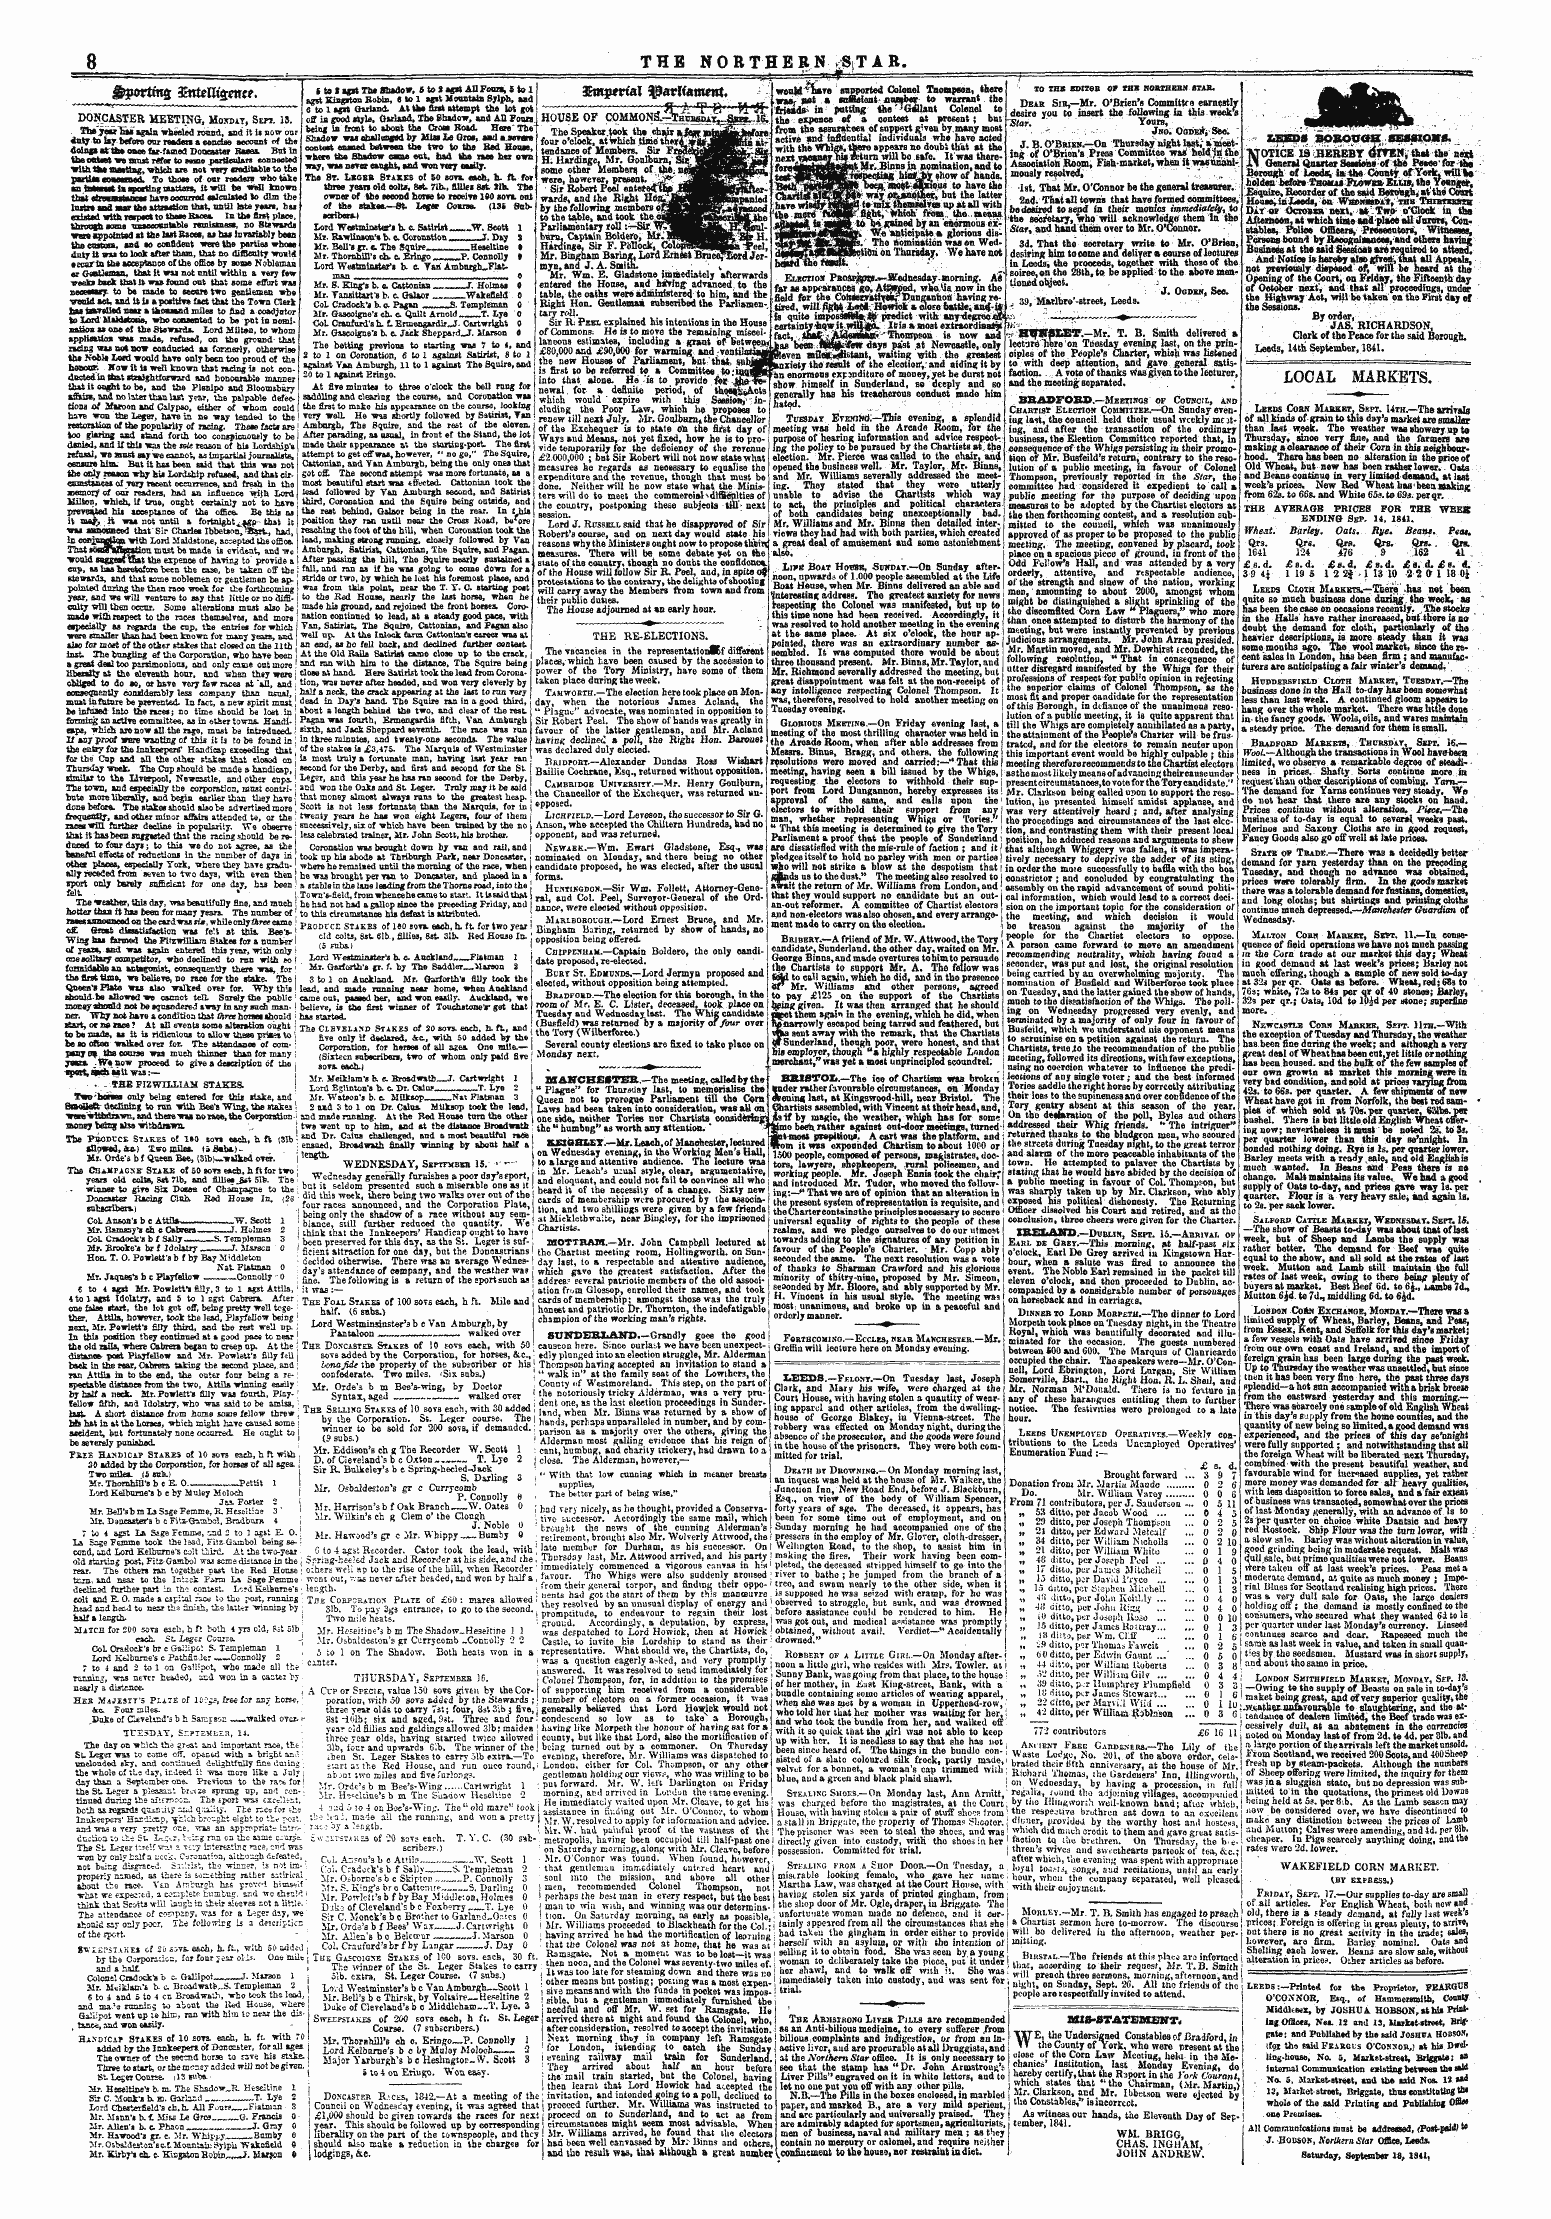 Northern Star (1837-1852): jS F Y, 3rd edition: 8